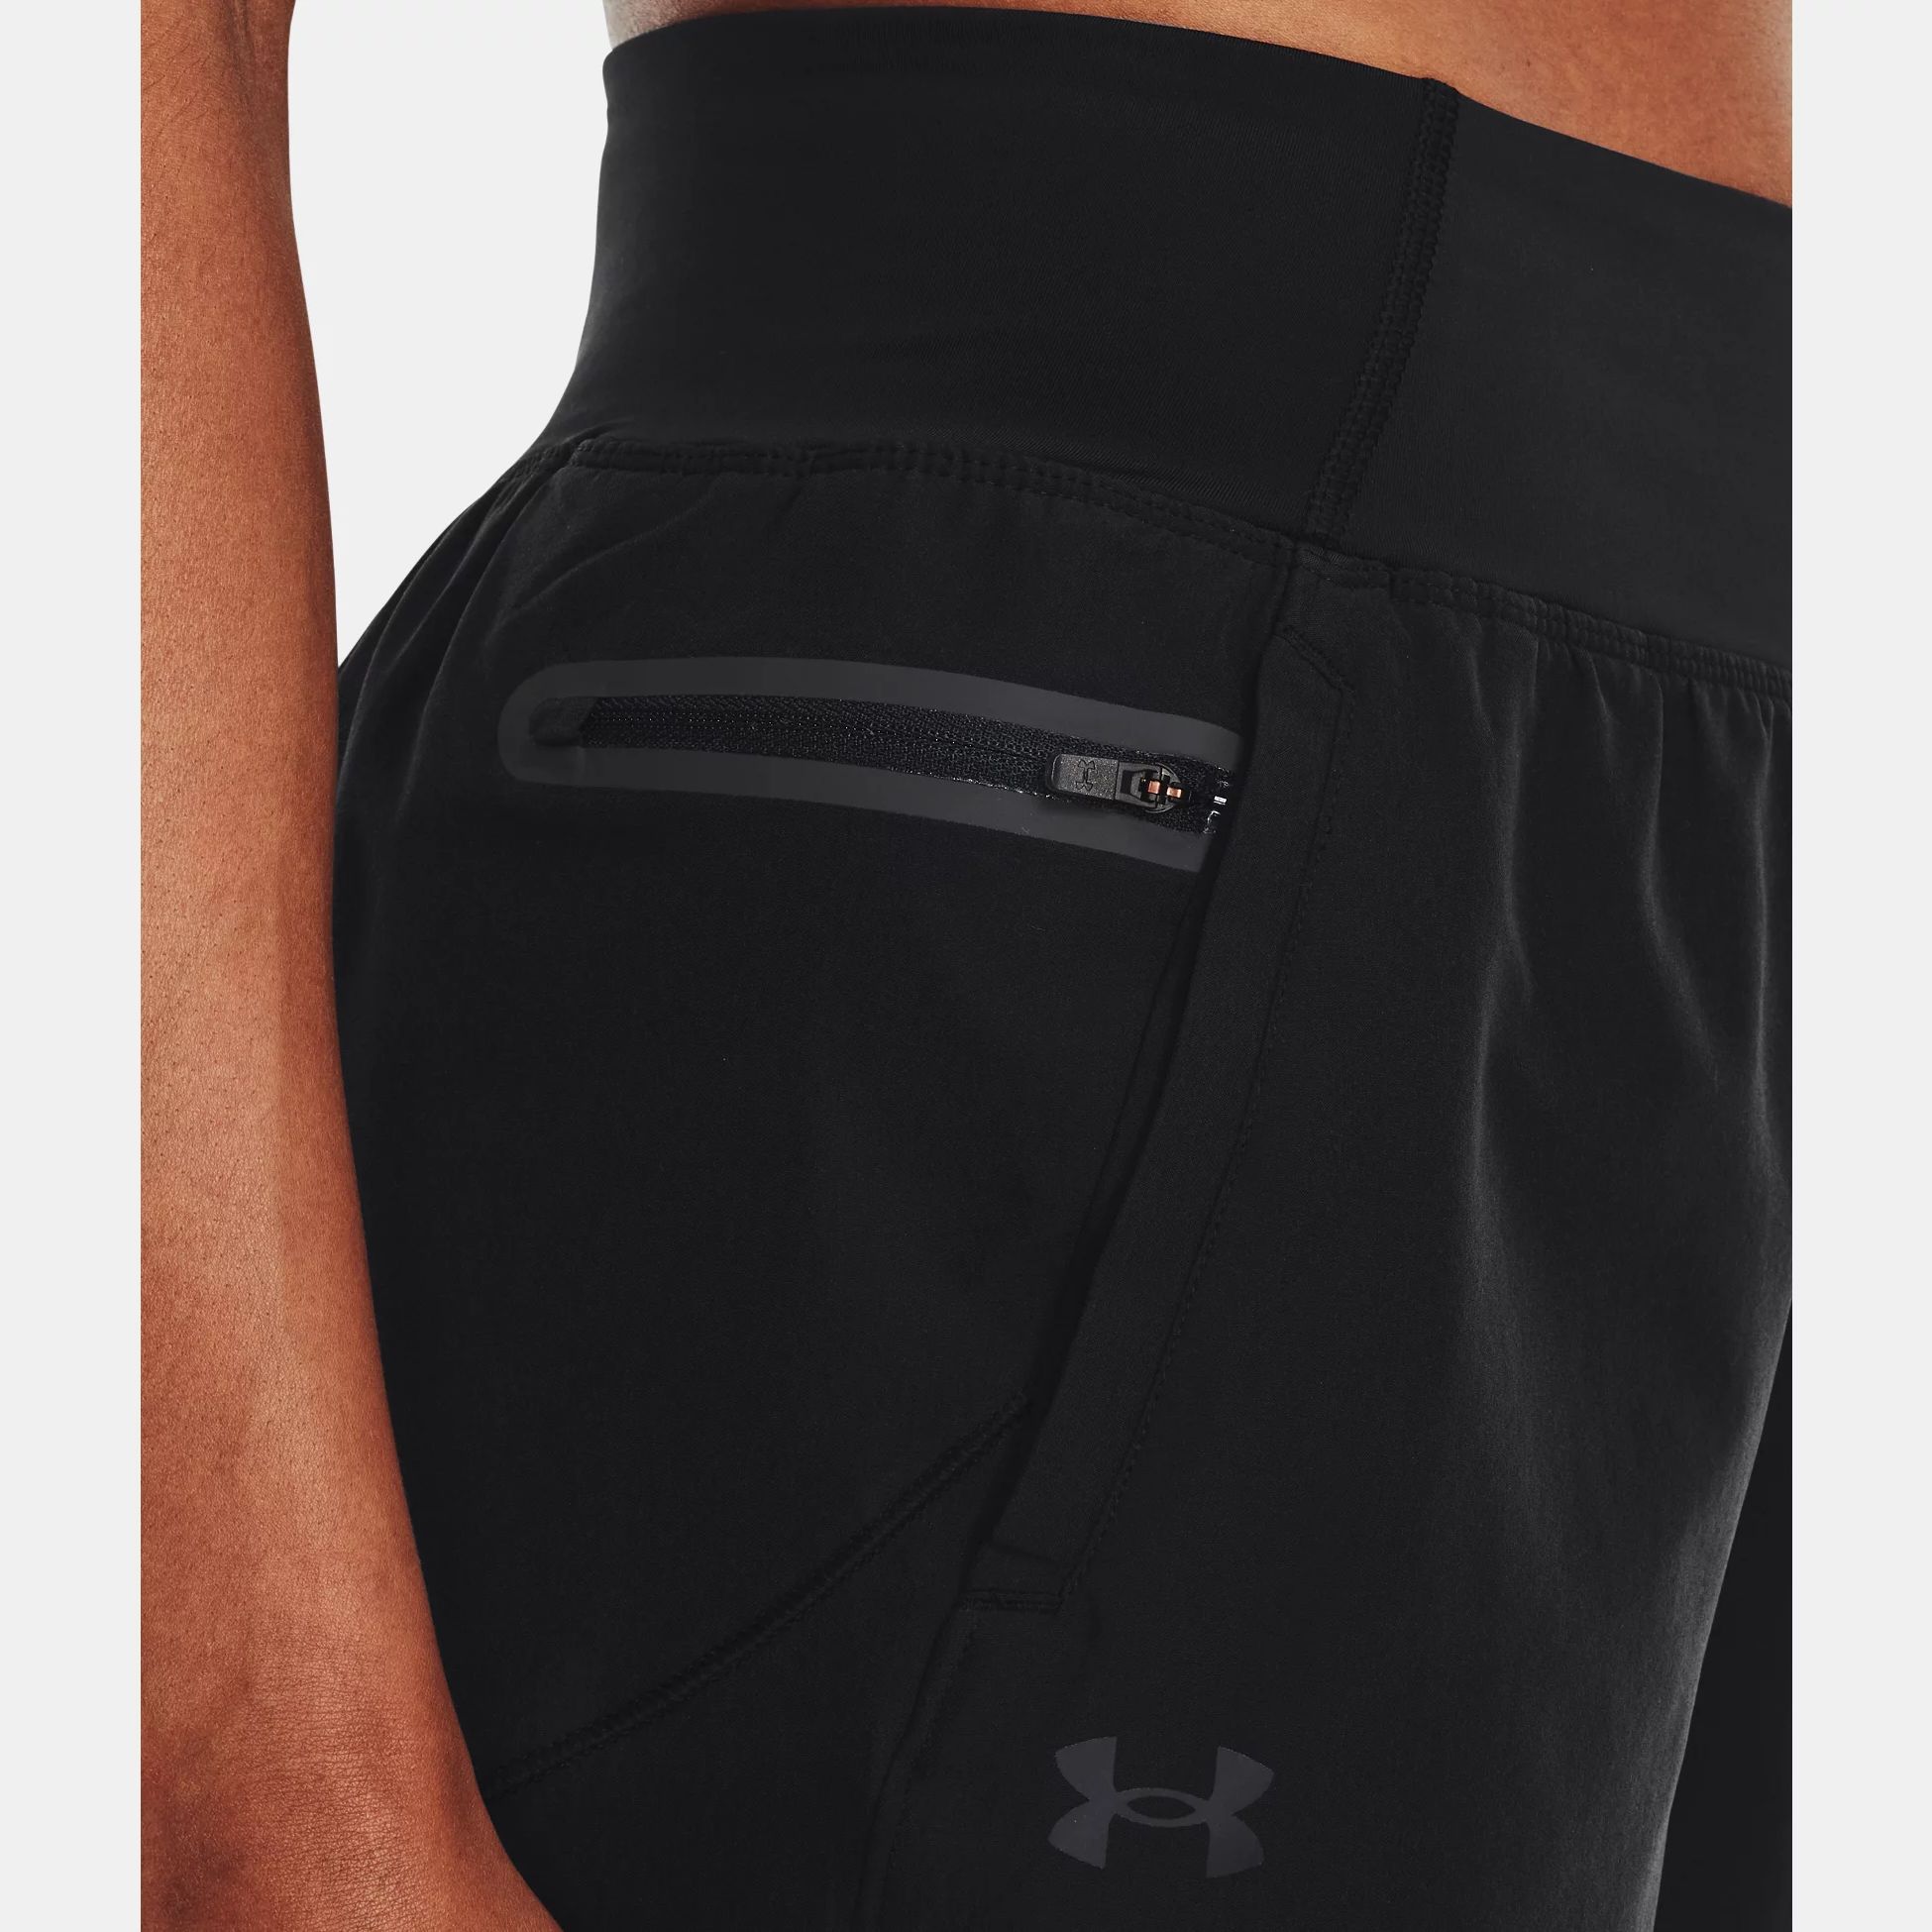 Shorts -  under armour UA Vanish SmartForm Shorts